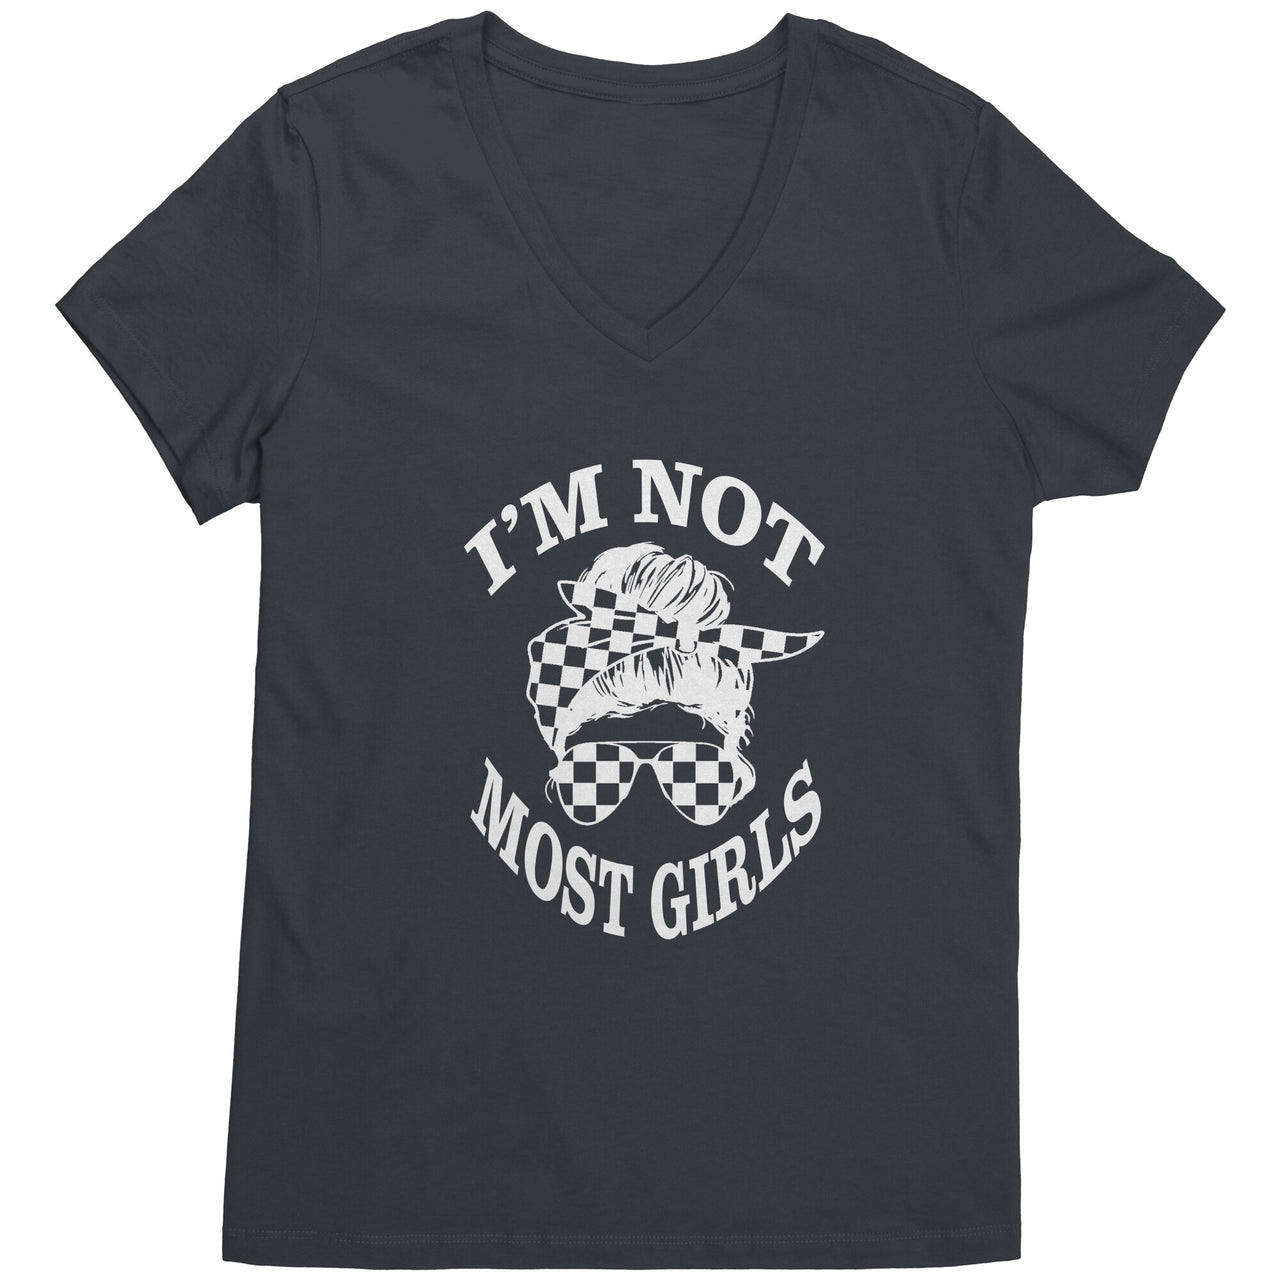 I'm Not Most Girls T-Shirts